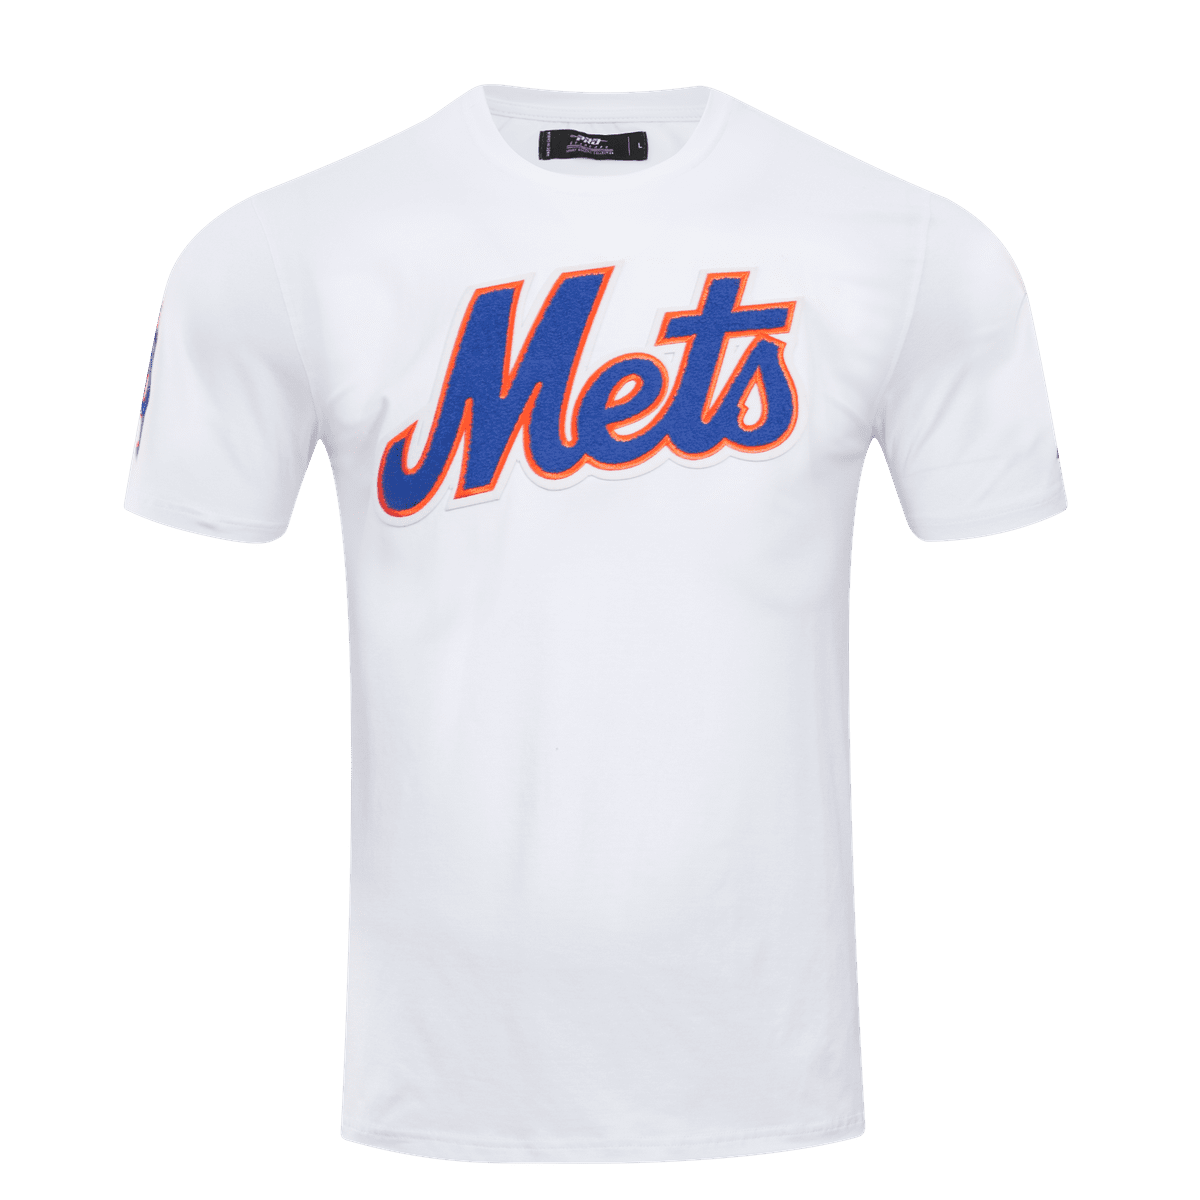 Women's Pro Standard Black New York Mets Cityscape Boxy T-Shirt Size: Extra Large